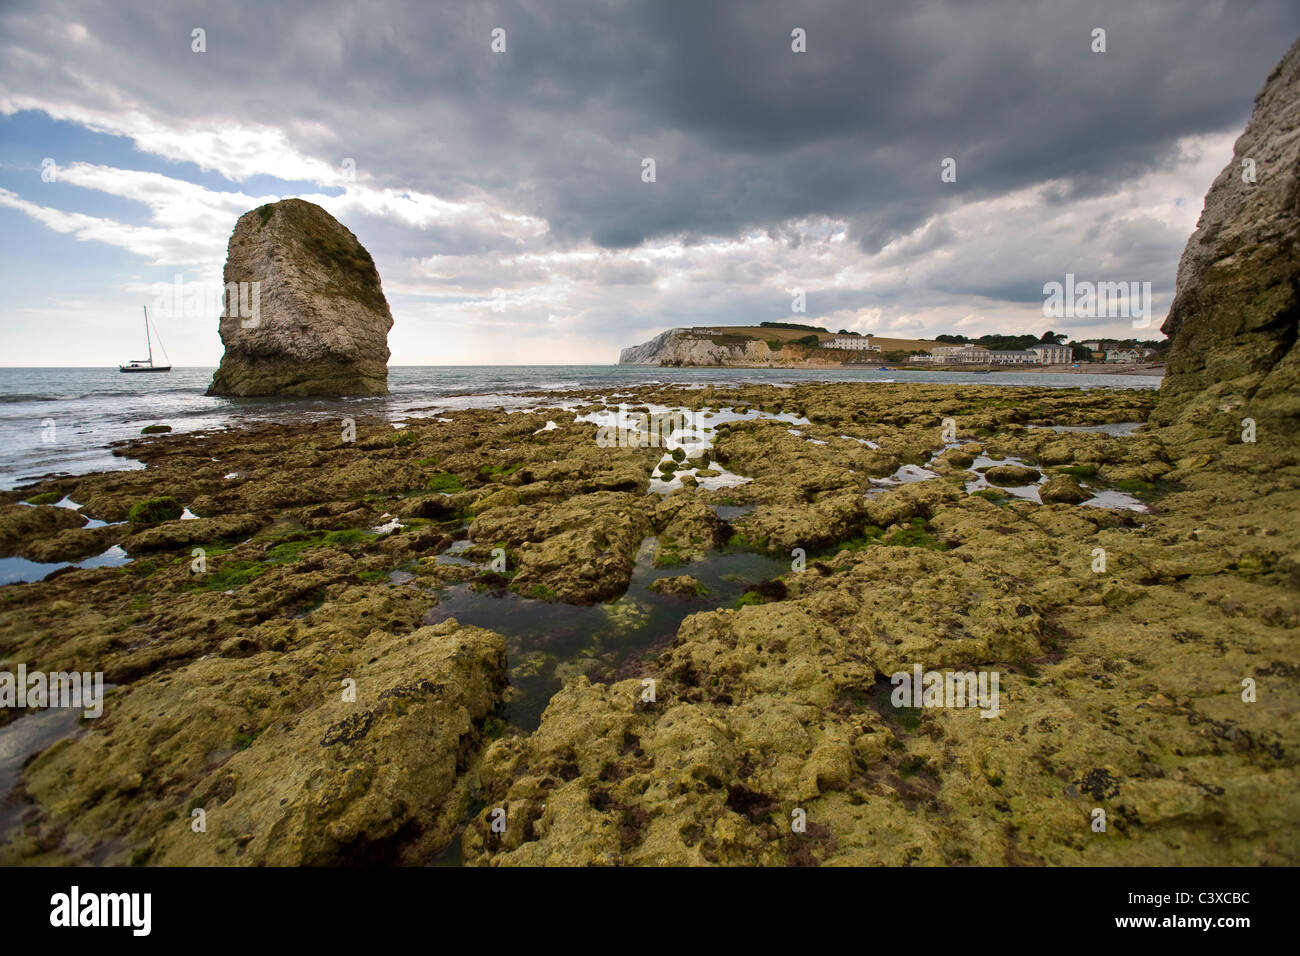 Plataforma Wave Cut, Fossil, Paleontología, Freshwater Bay, Isla de Wight, Inglaterra, Reino Unido, playa. Geología, Foto de stock